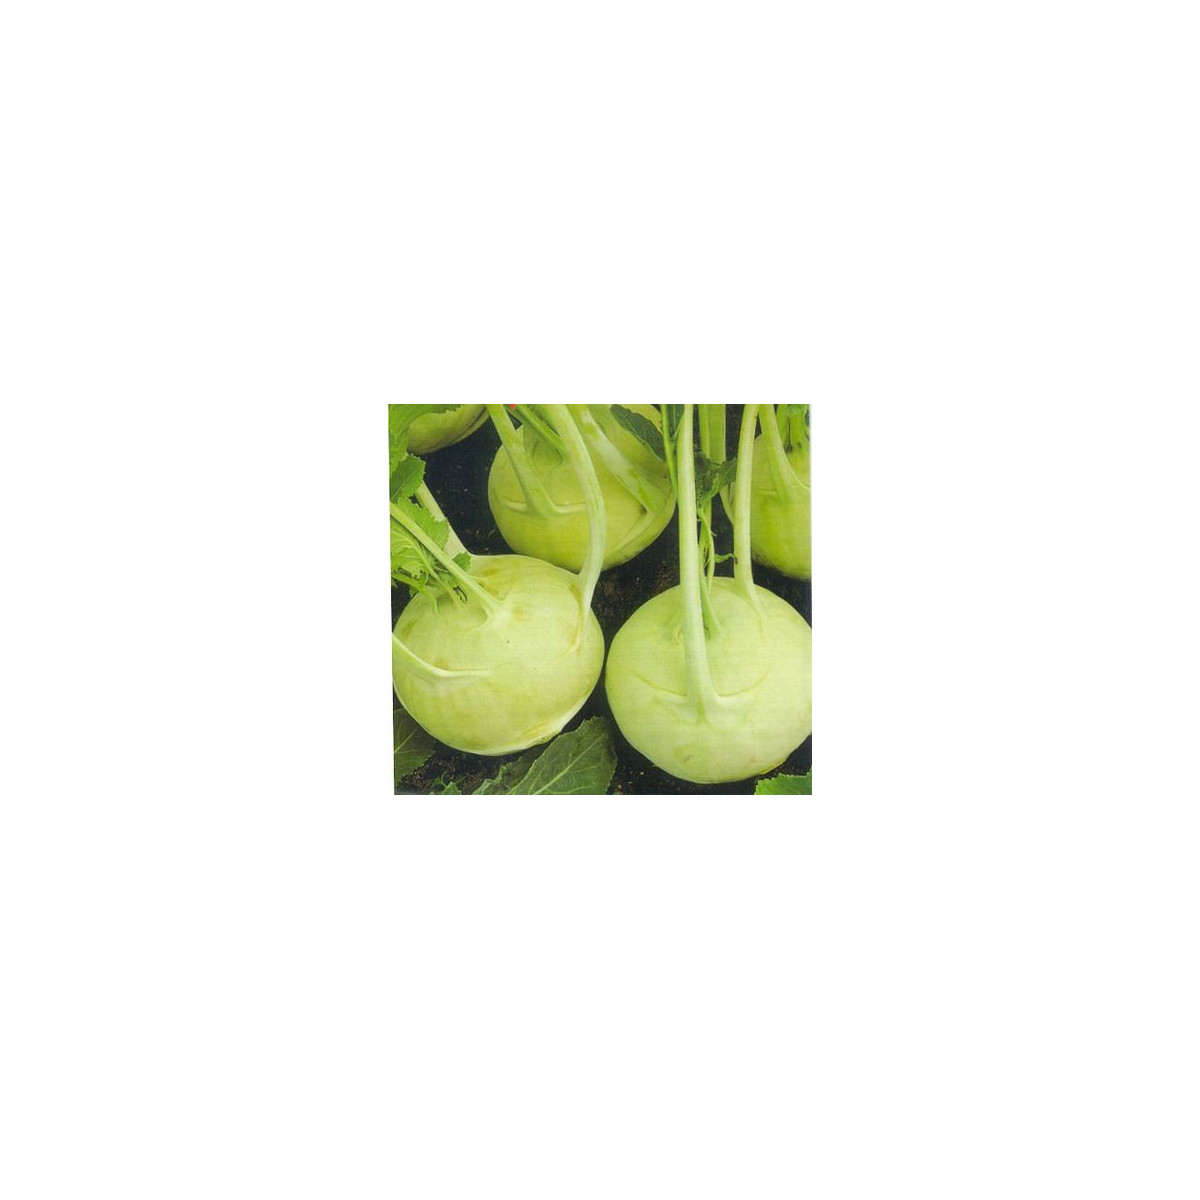 Kedluben extra jemný - rostlina Brassica oleracea - prodej semen kedlubny - 50 ks